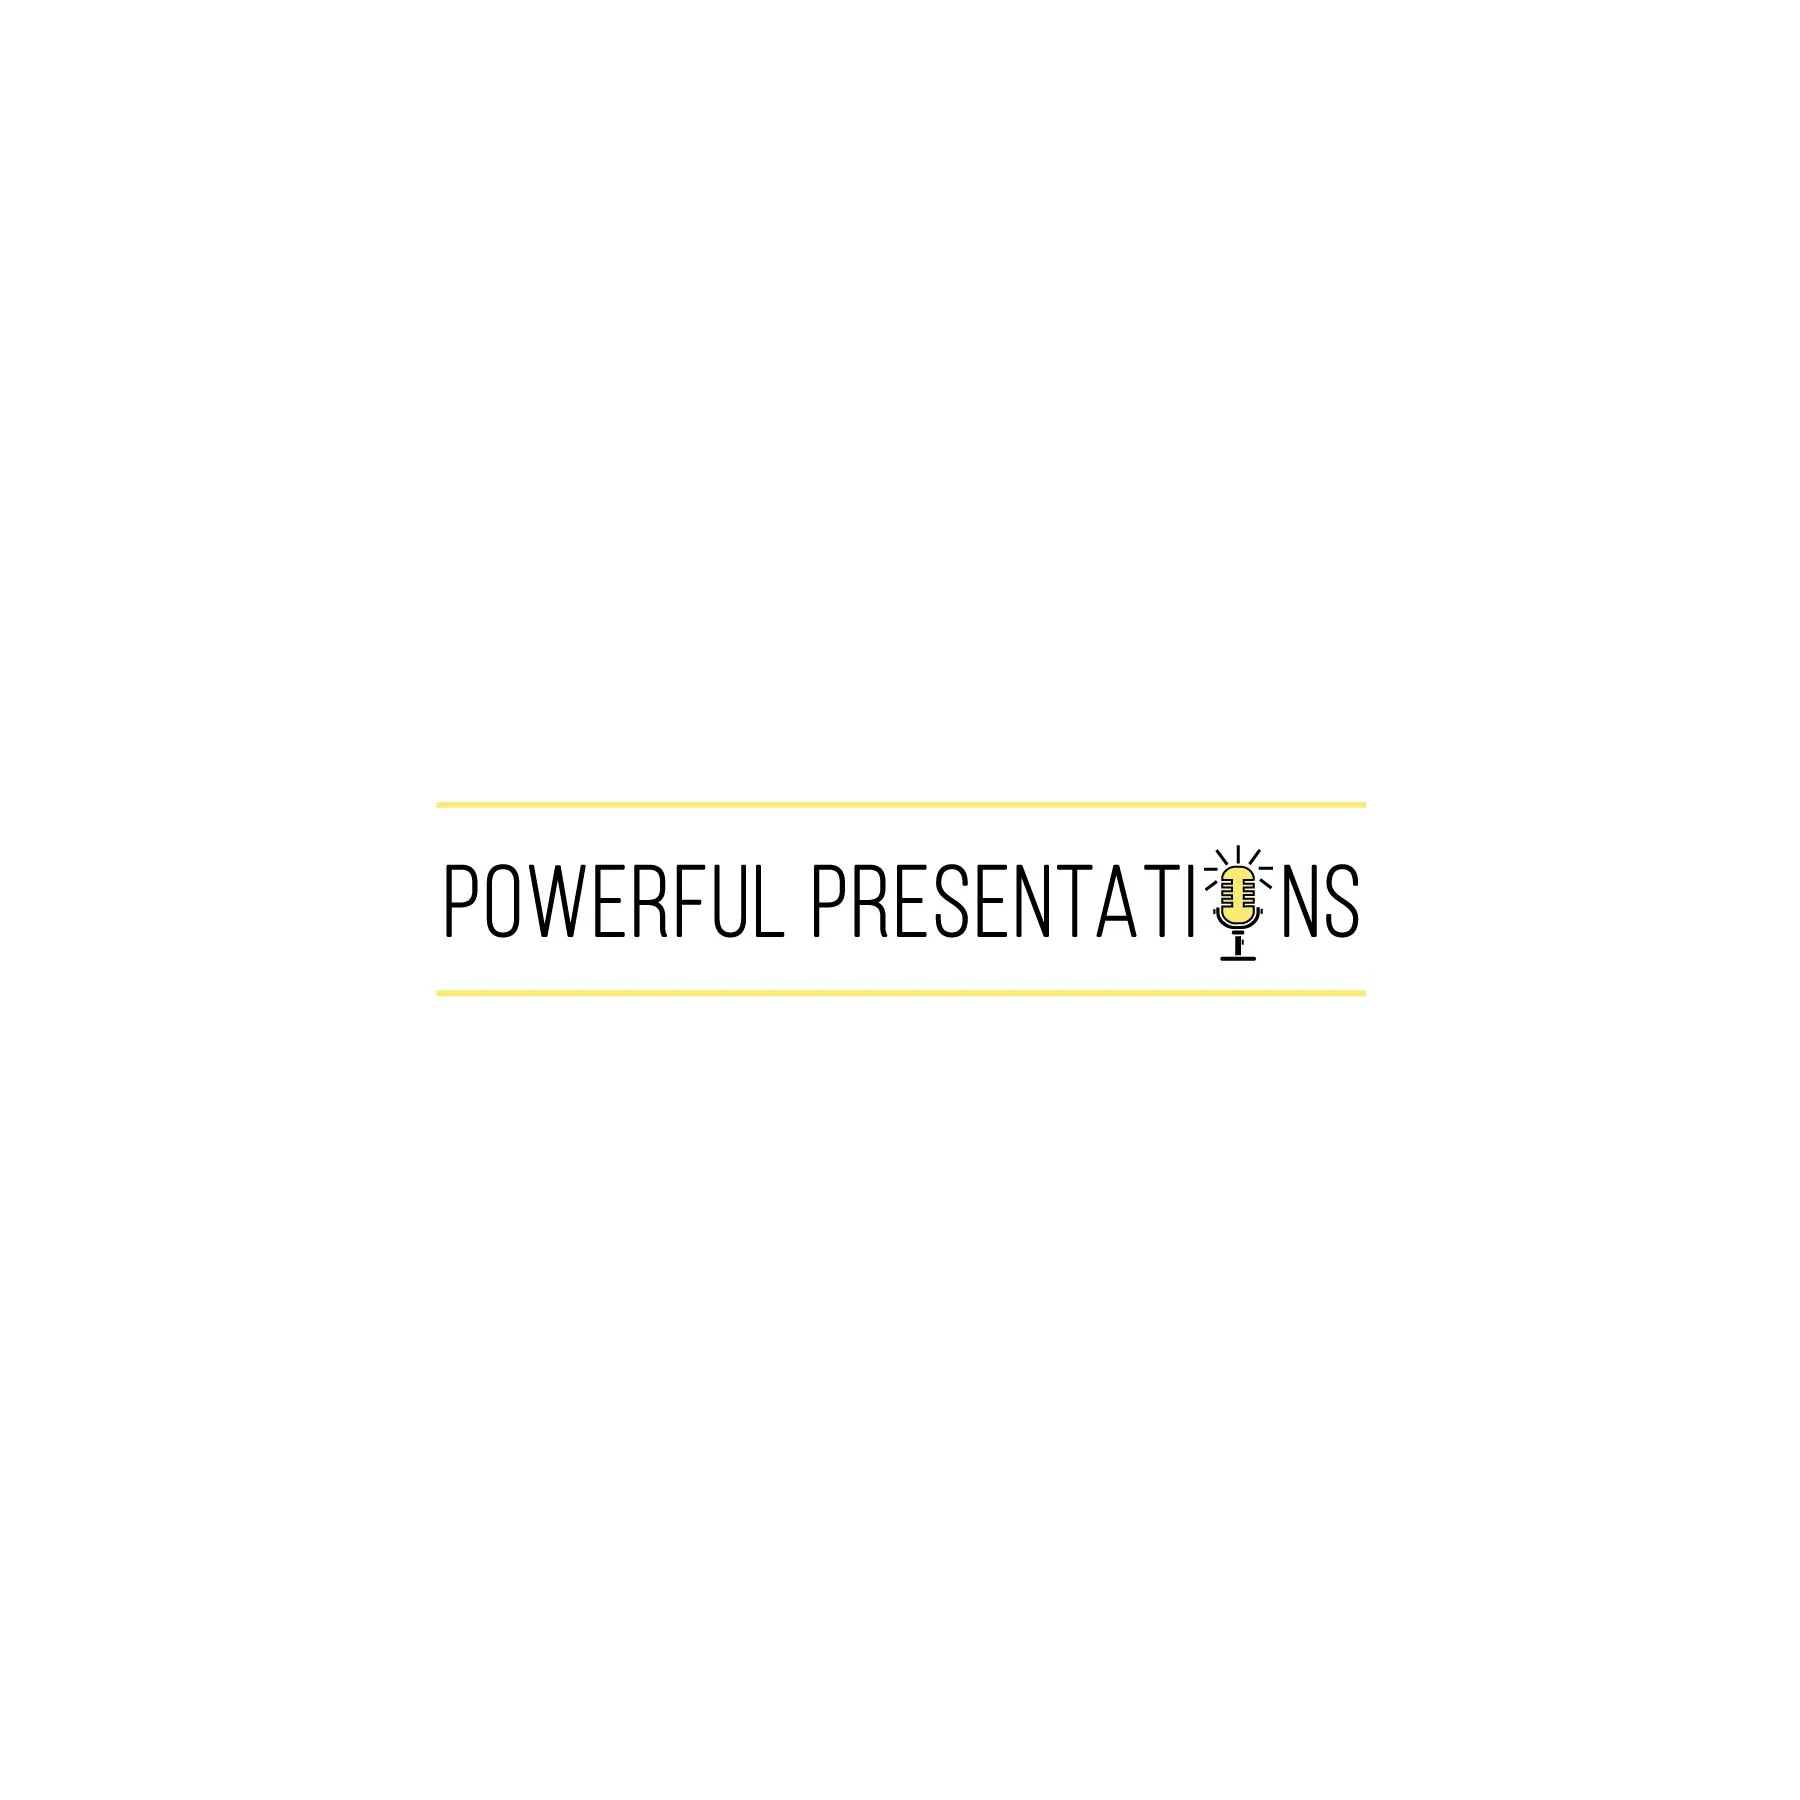 Powerful Presentations